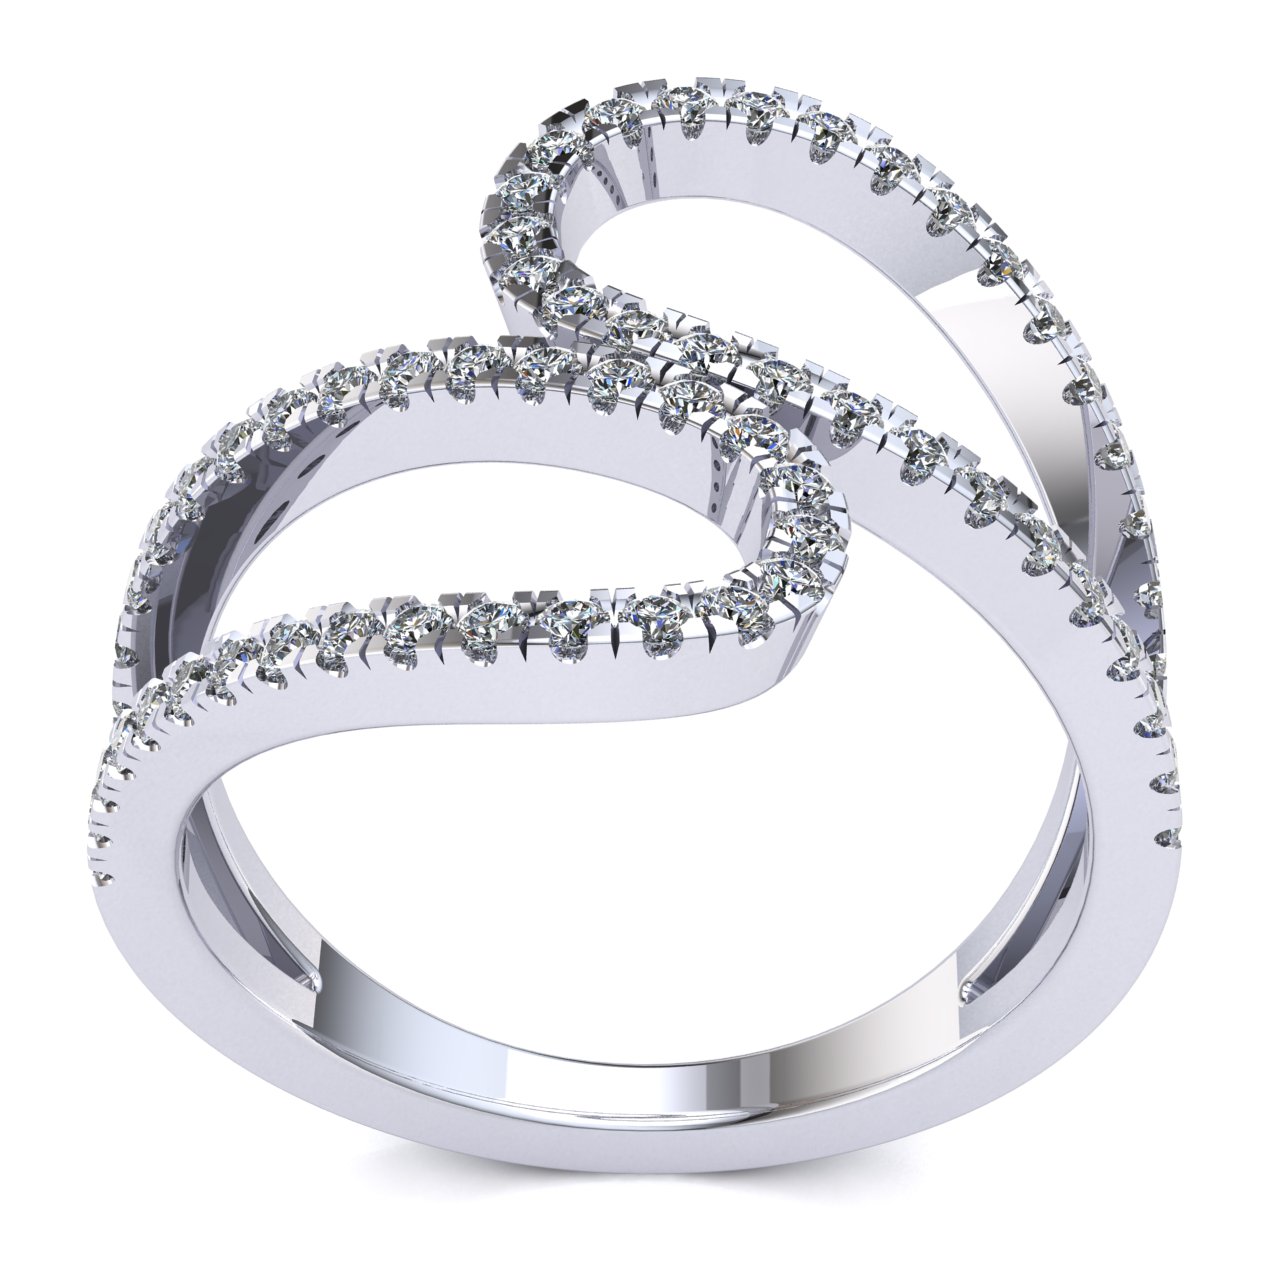 1.5ct Round Cut Diamond Twisted Bypass Wedding Band Ring